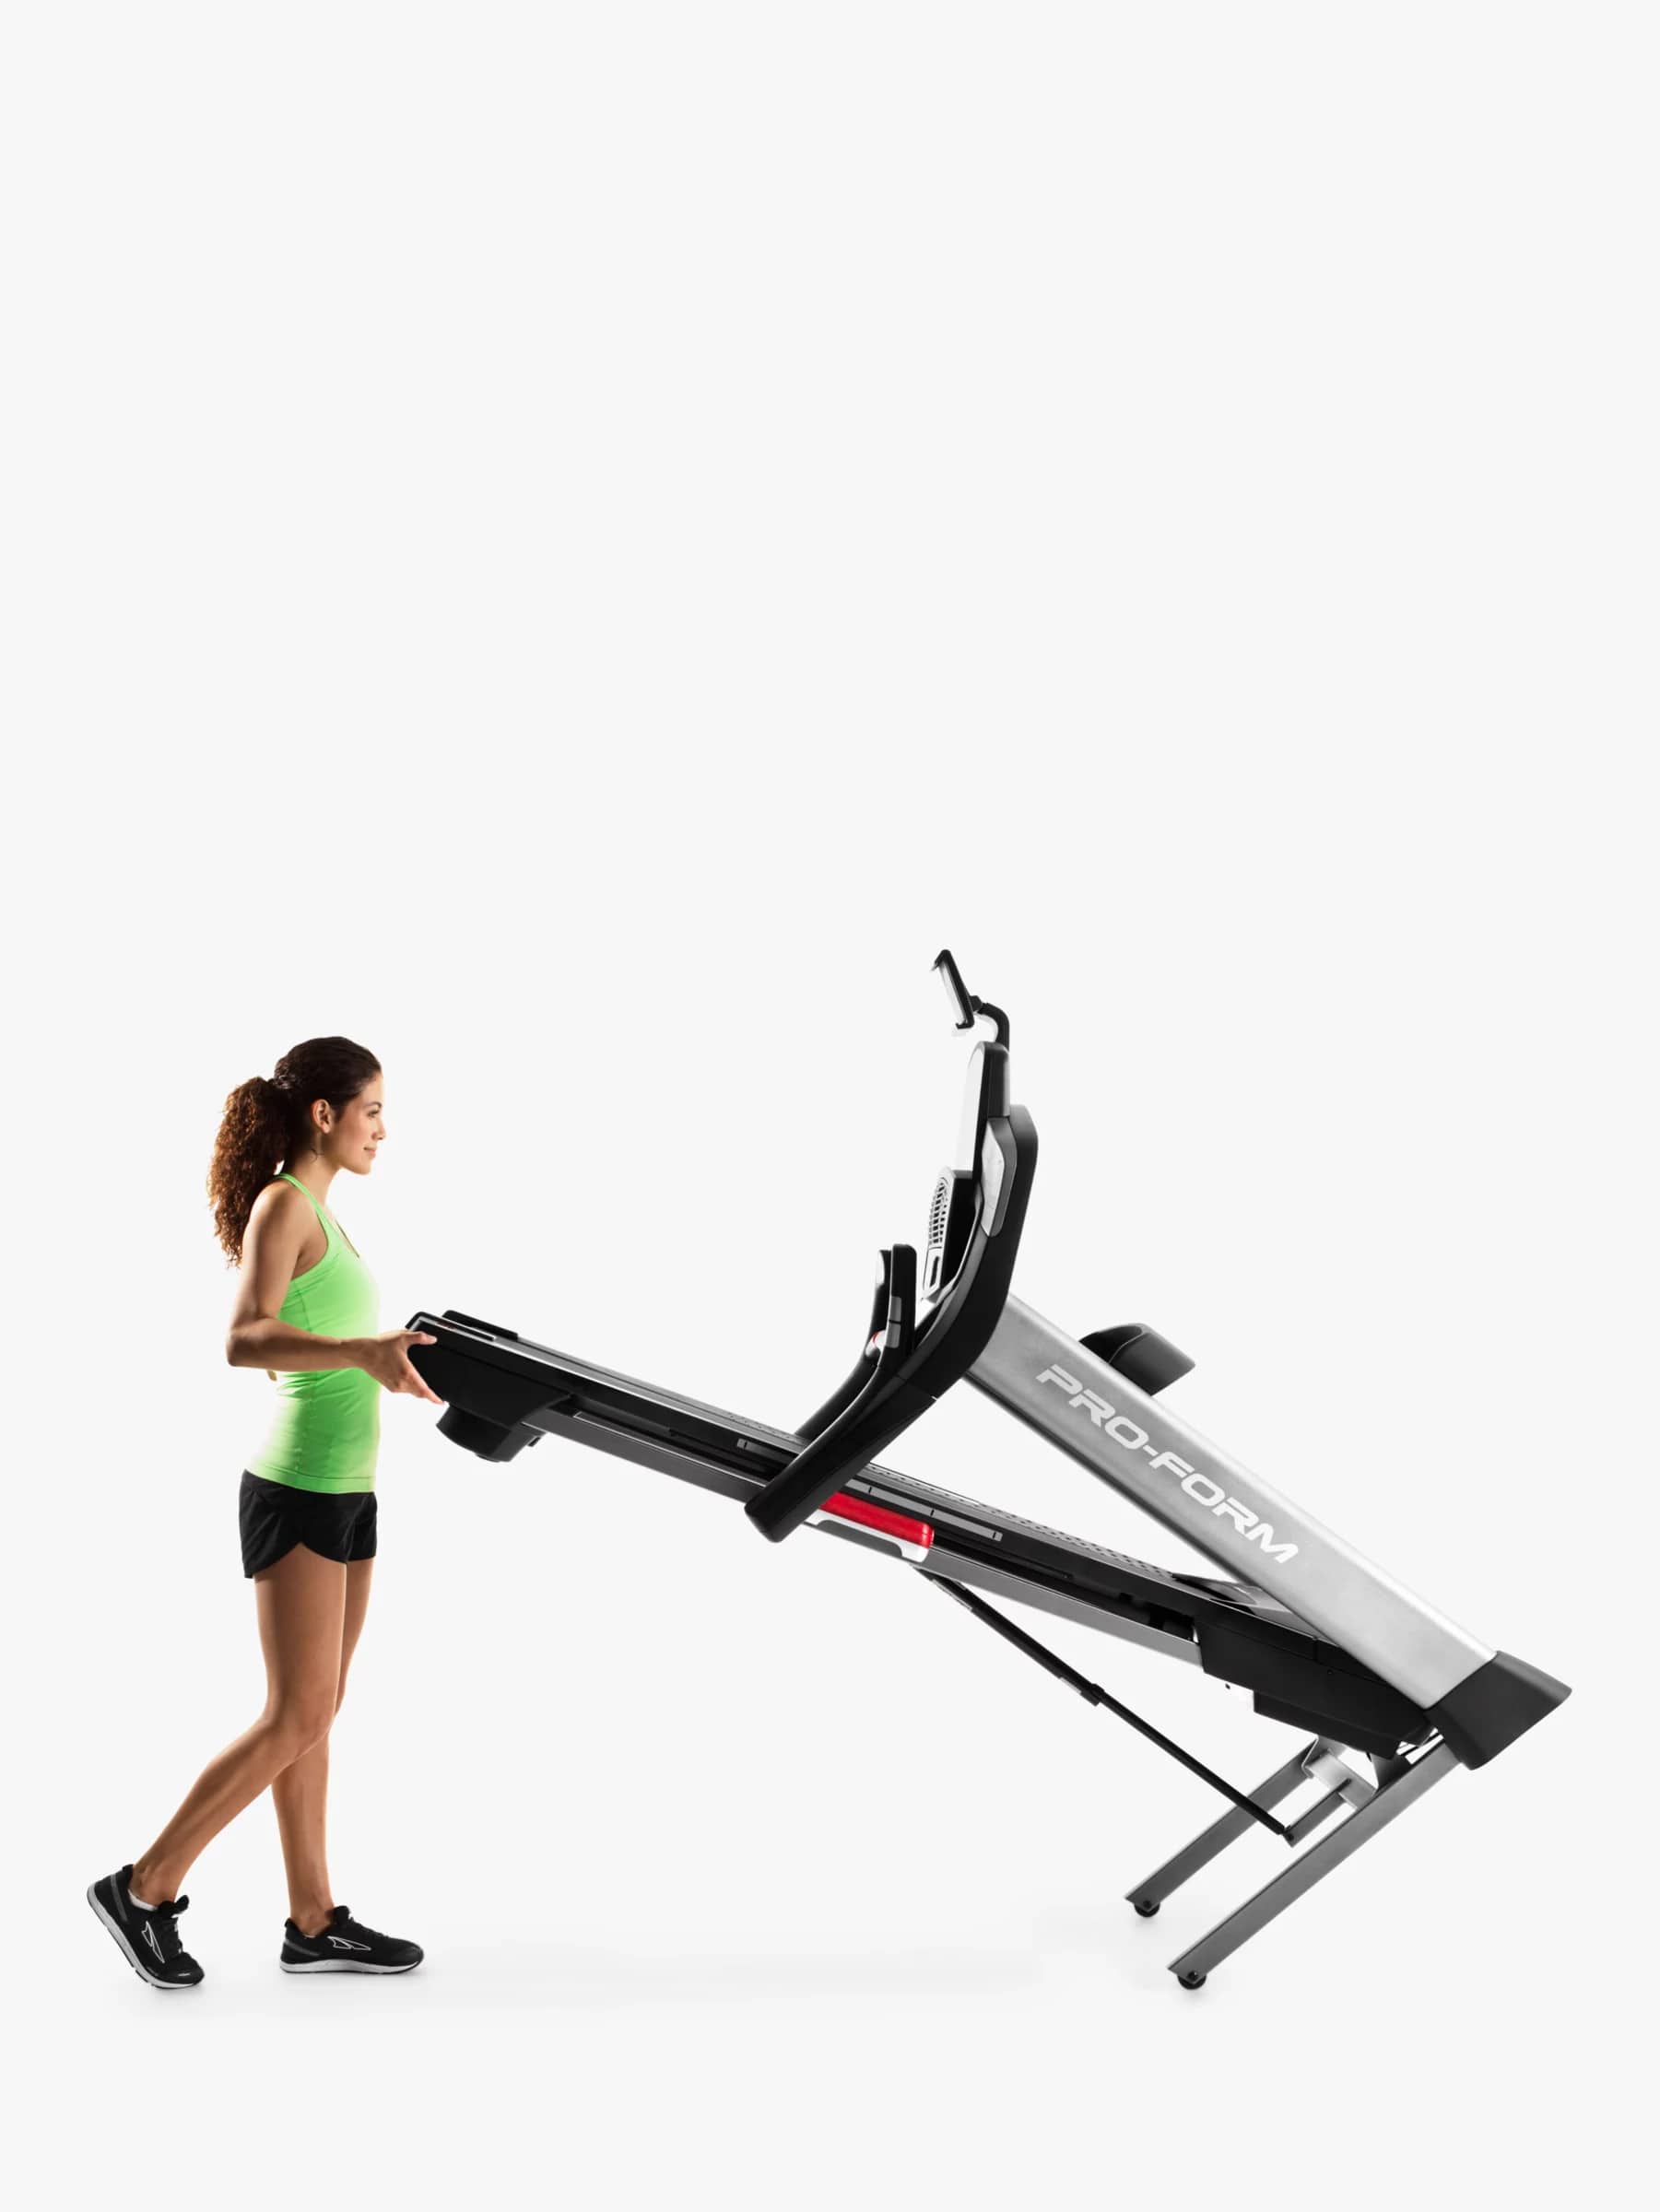 ProForm Pro 1000 Treadmill moving